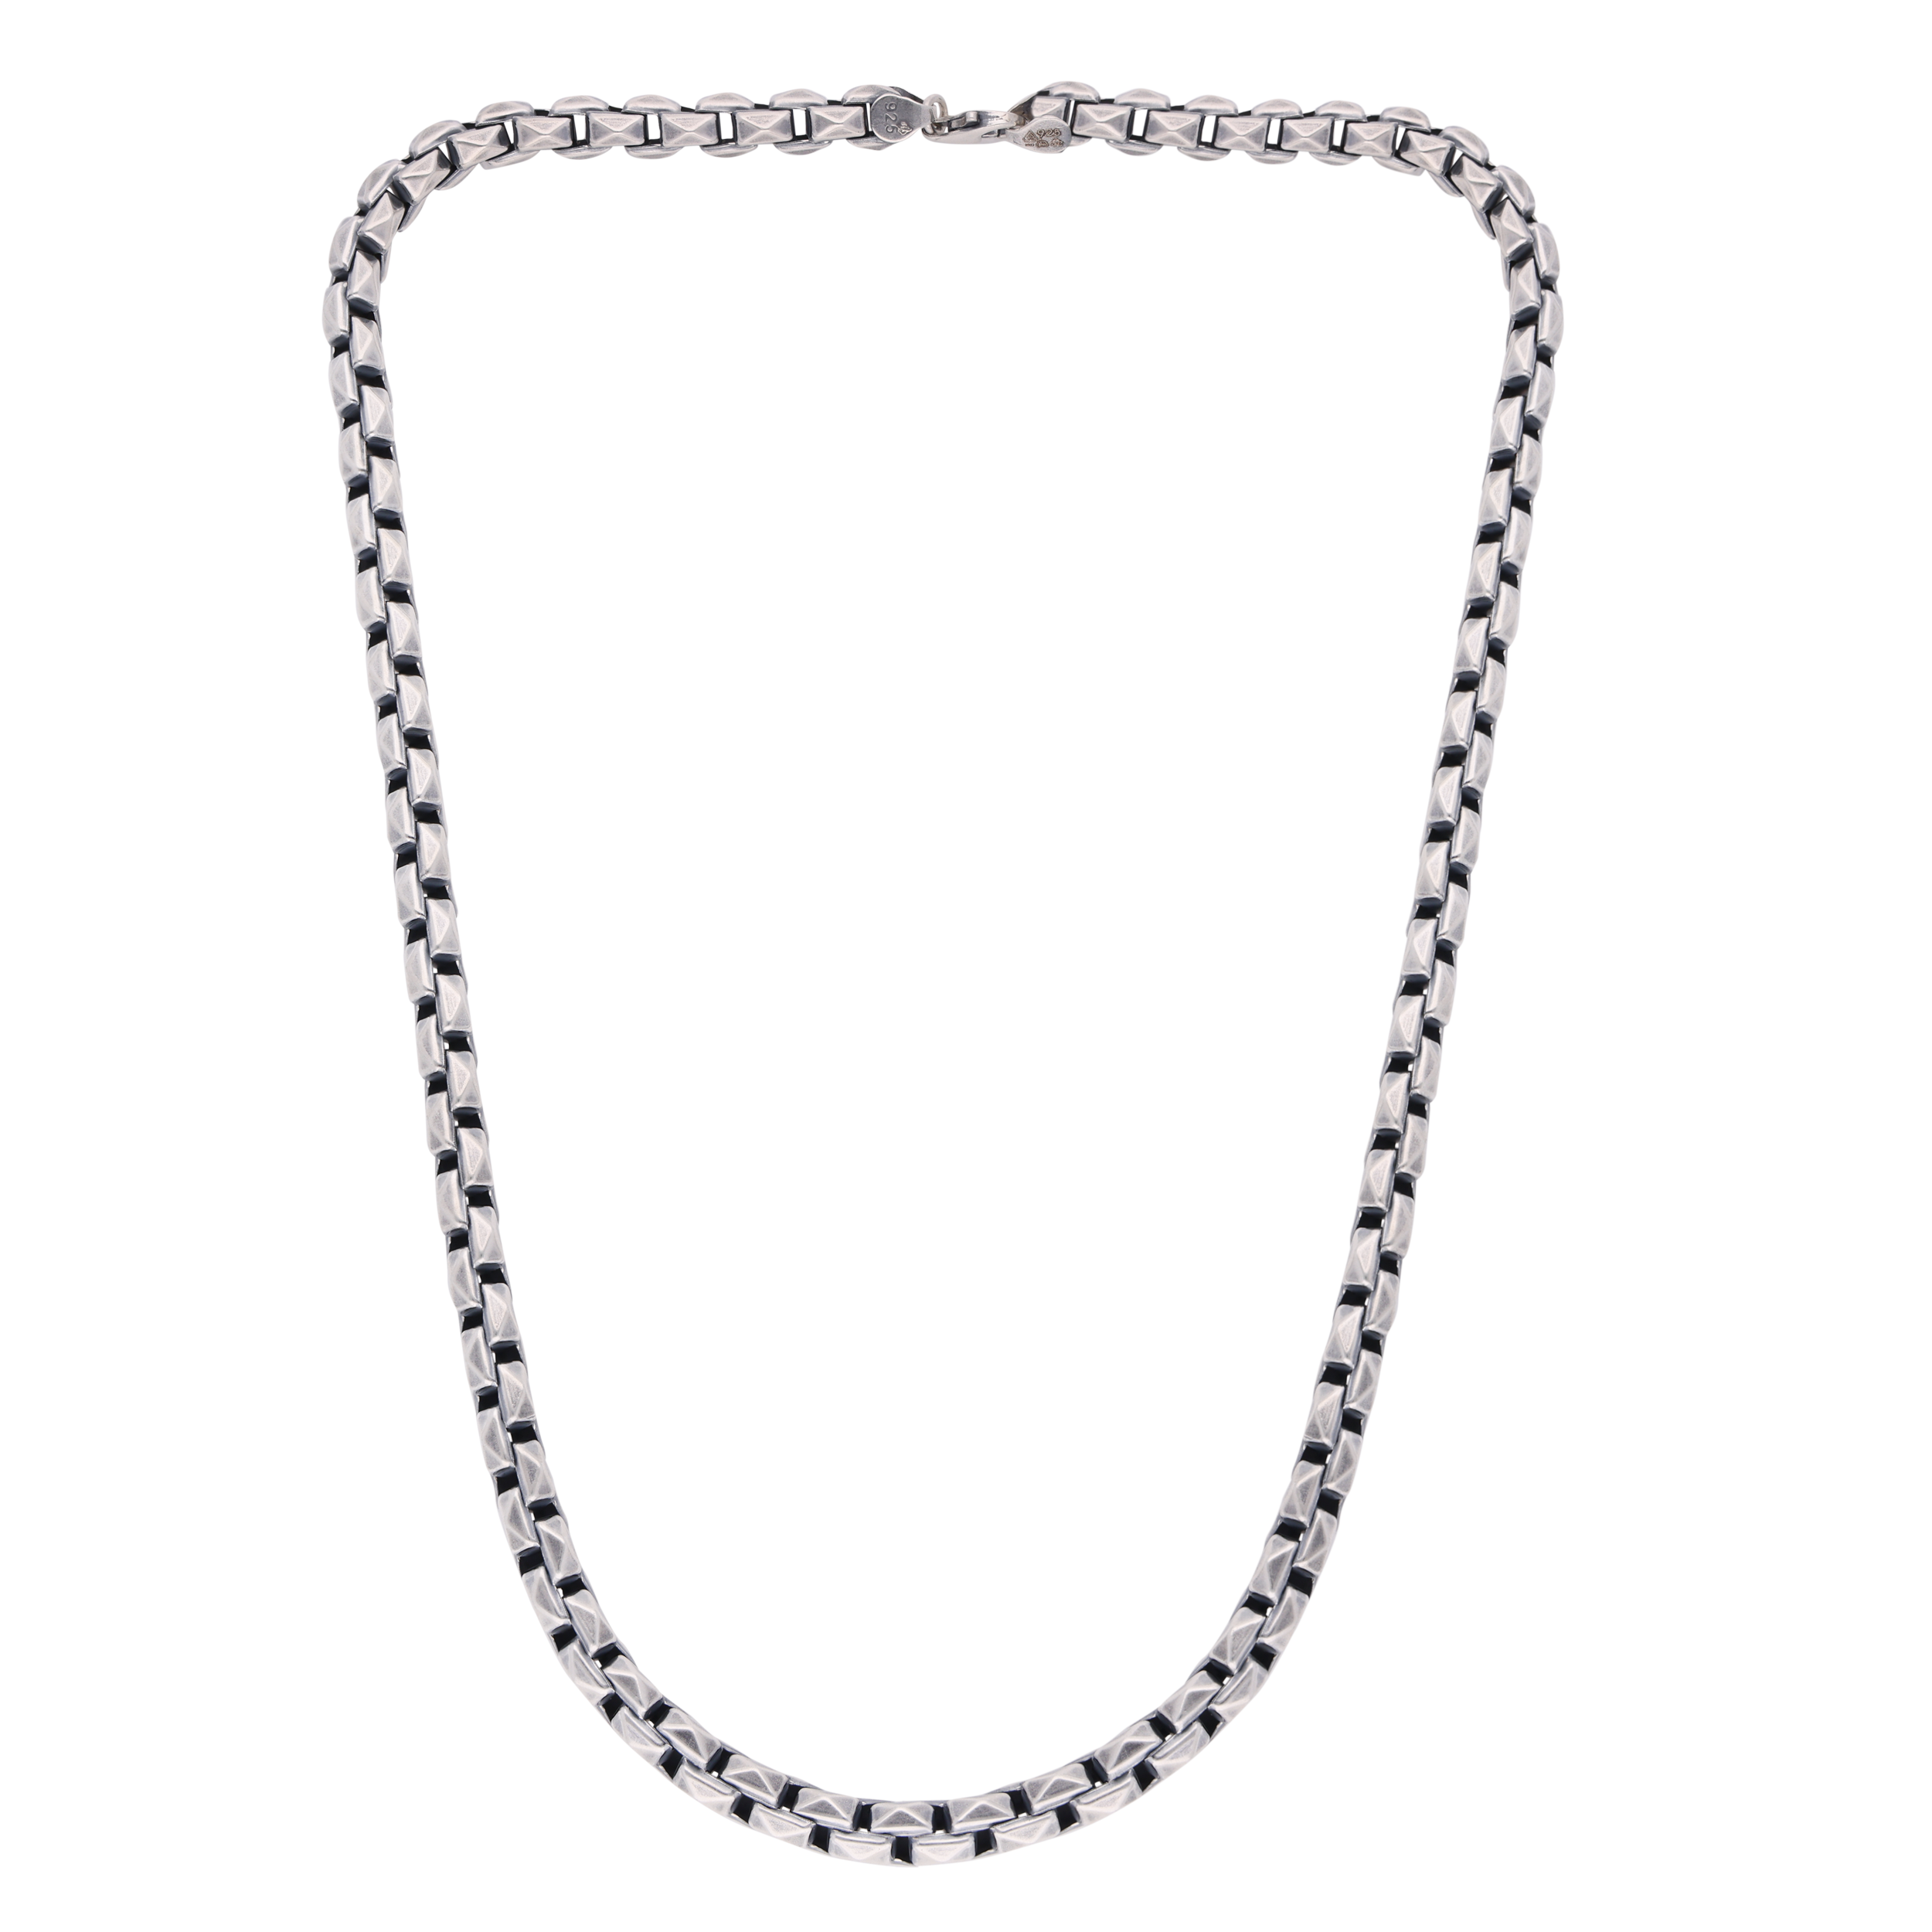 "Rhine Elegance: Sterling Silver Masculine Chain" | SKU : 0019379944, 0019379968, 0019379951